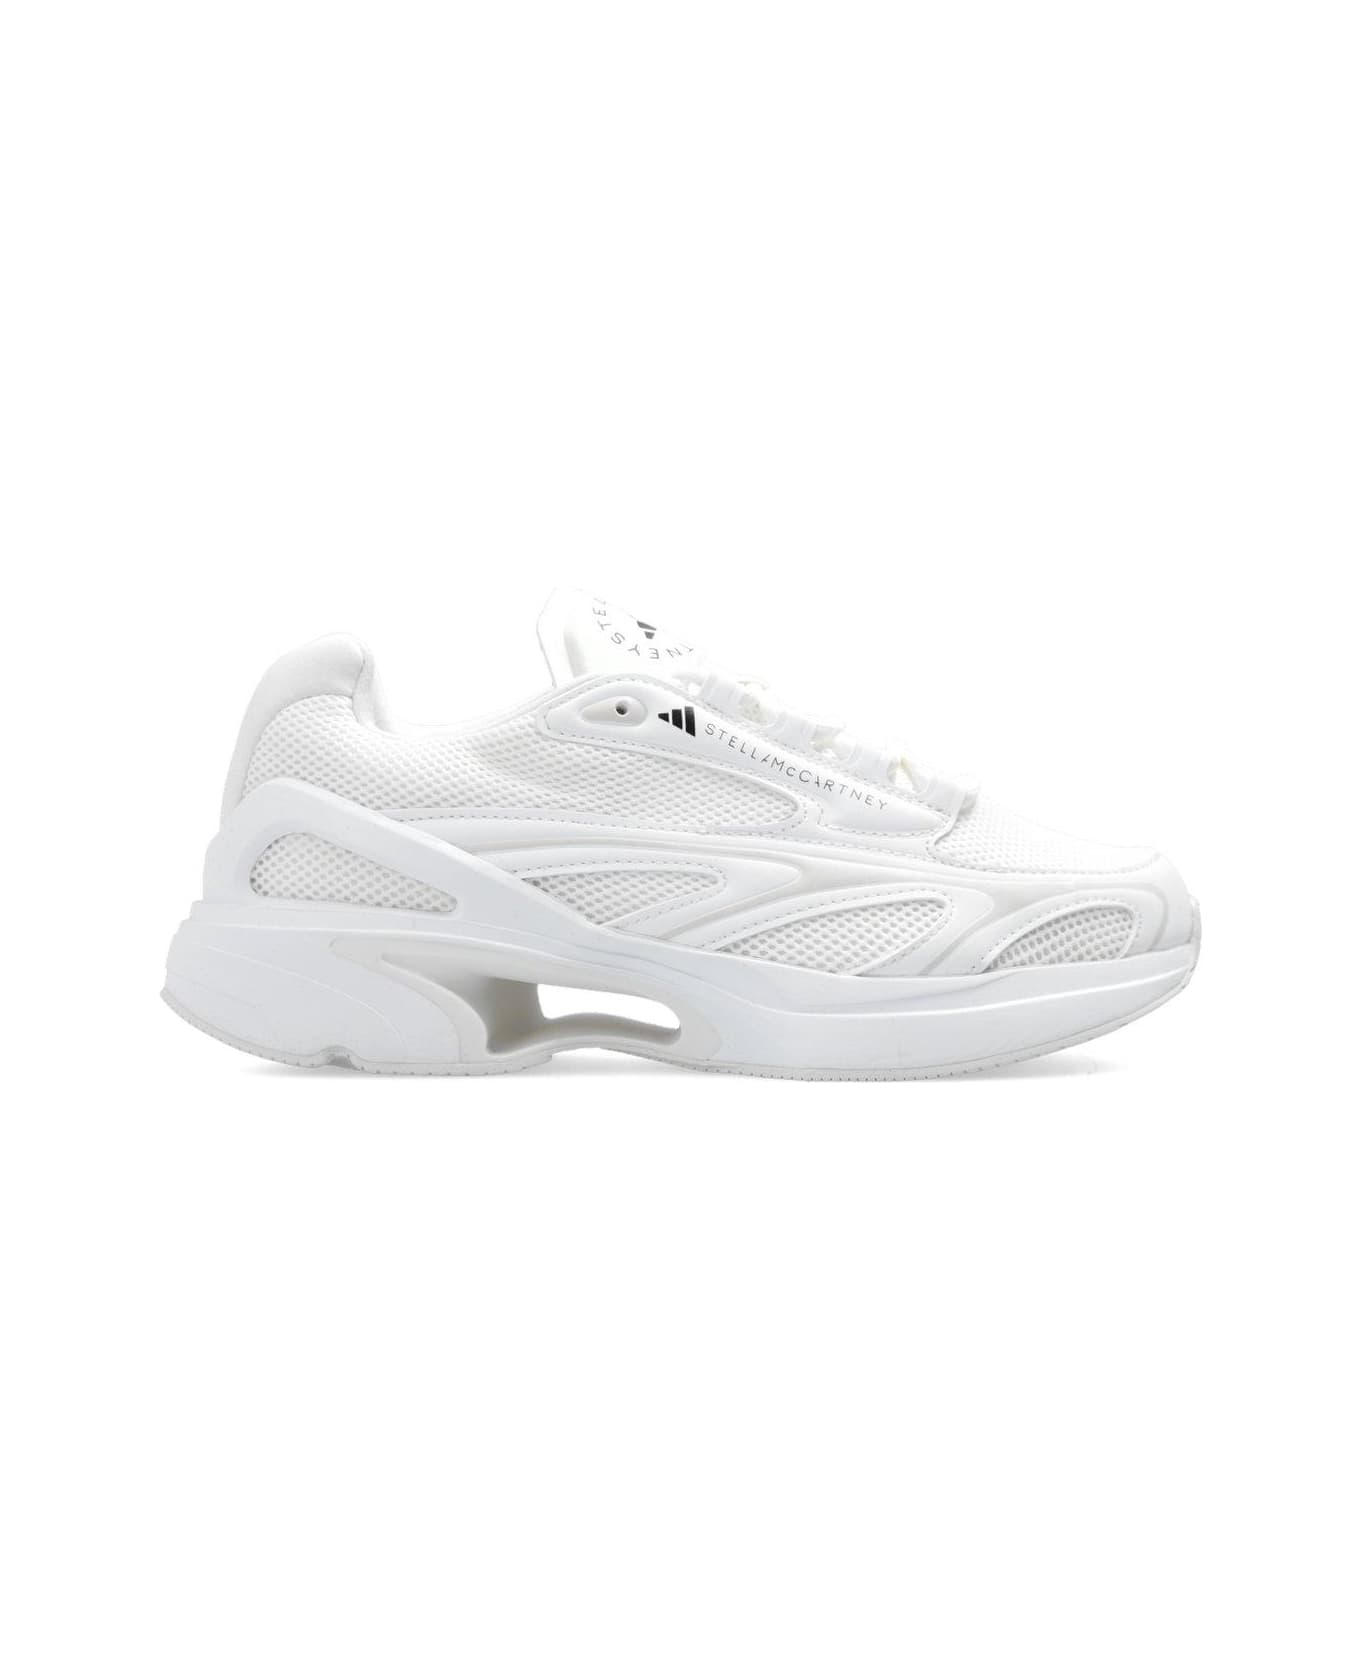 Adidas by Stella McCartney Sportswear 2000 Lace-up Sneakers スニーカー